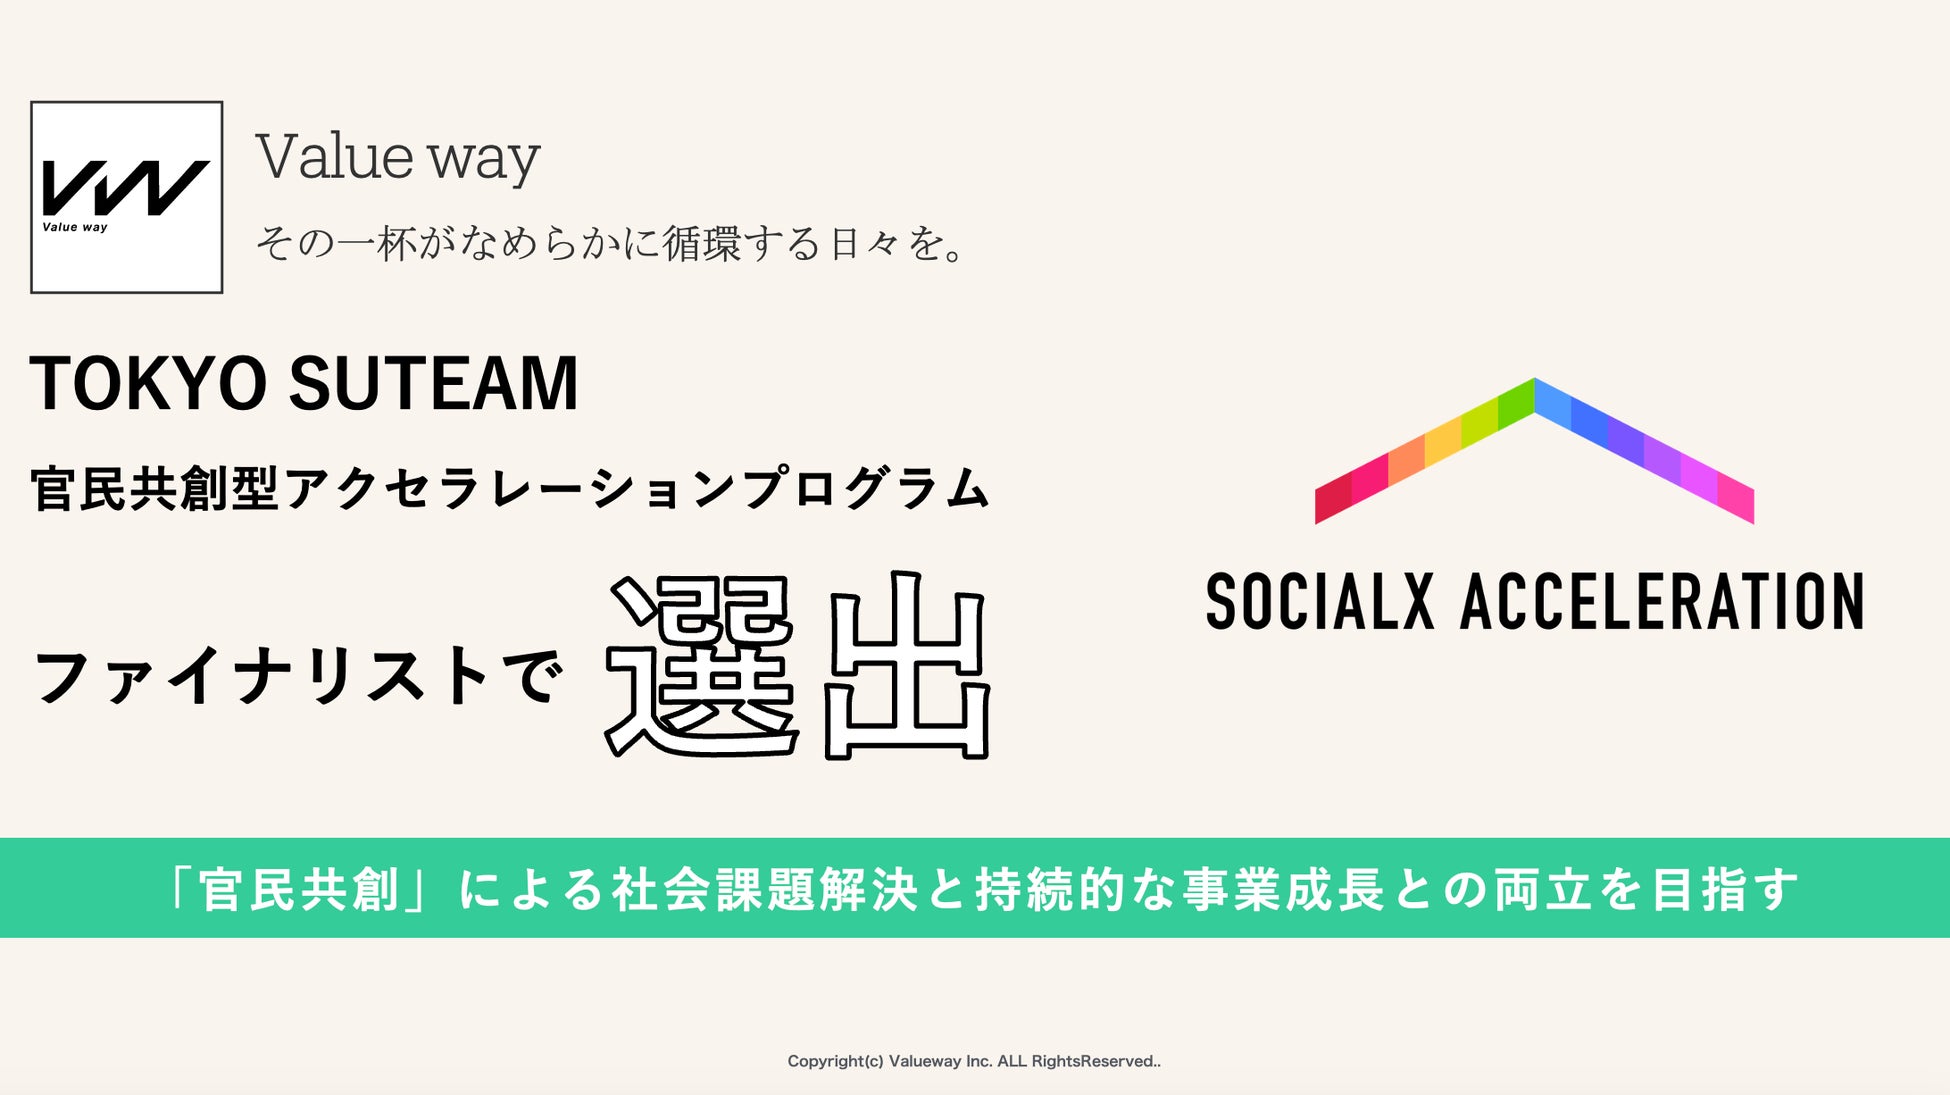 TOKYO SUTEAM 官民共創型アクセラレーションプログラムにValue wayがファイナリスト選出